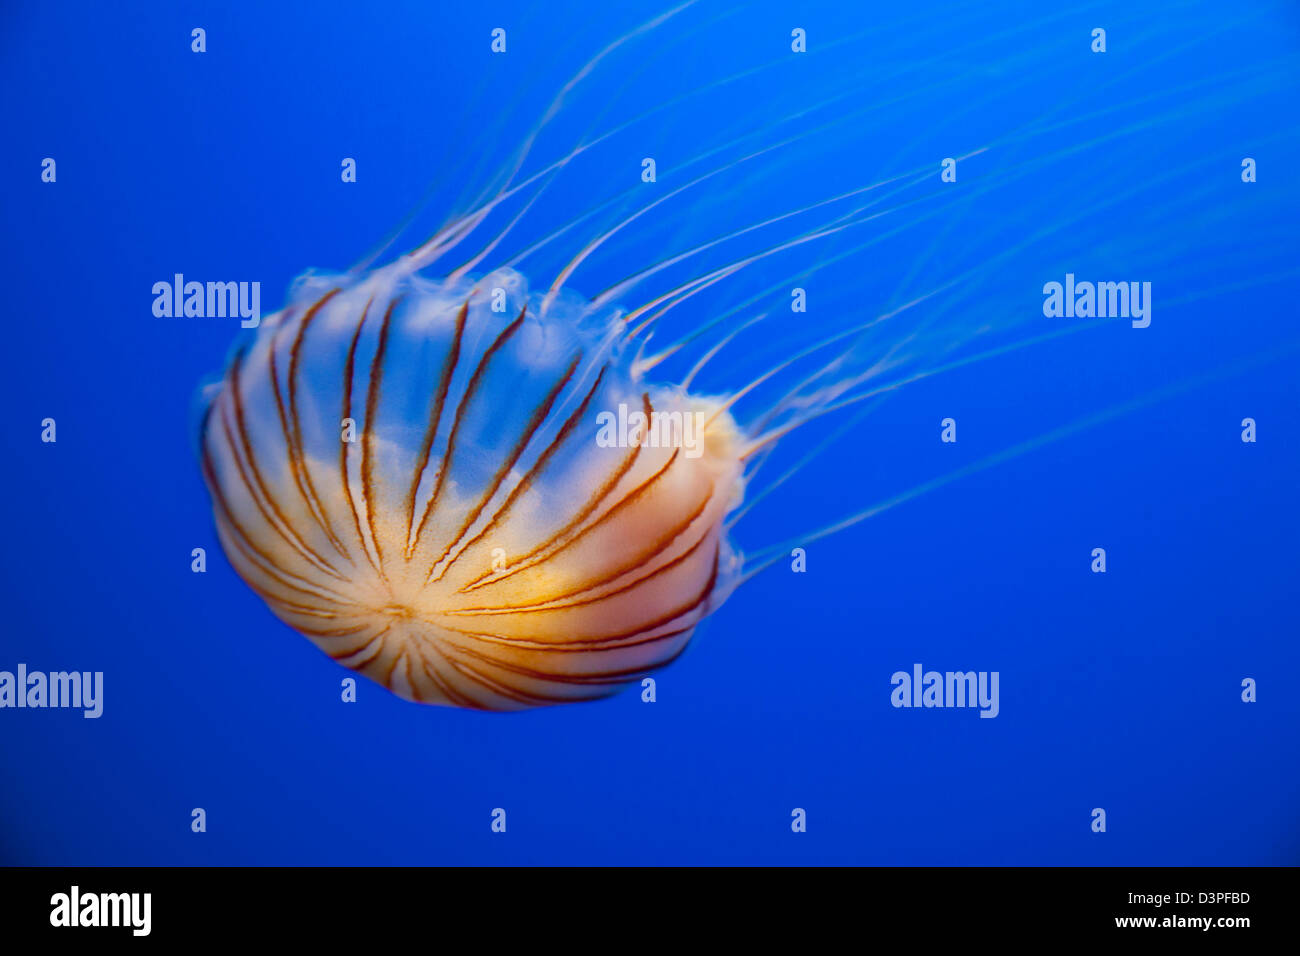 The compass jellyfish, Chrysaora hysoscella, has a diameter of up to 30 cm. Aquarium photograph. Stock Photo